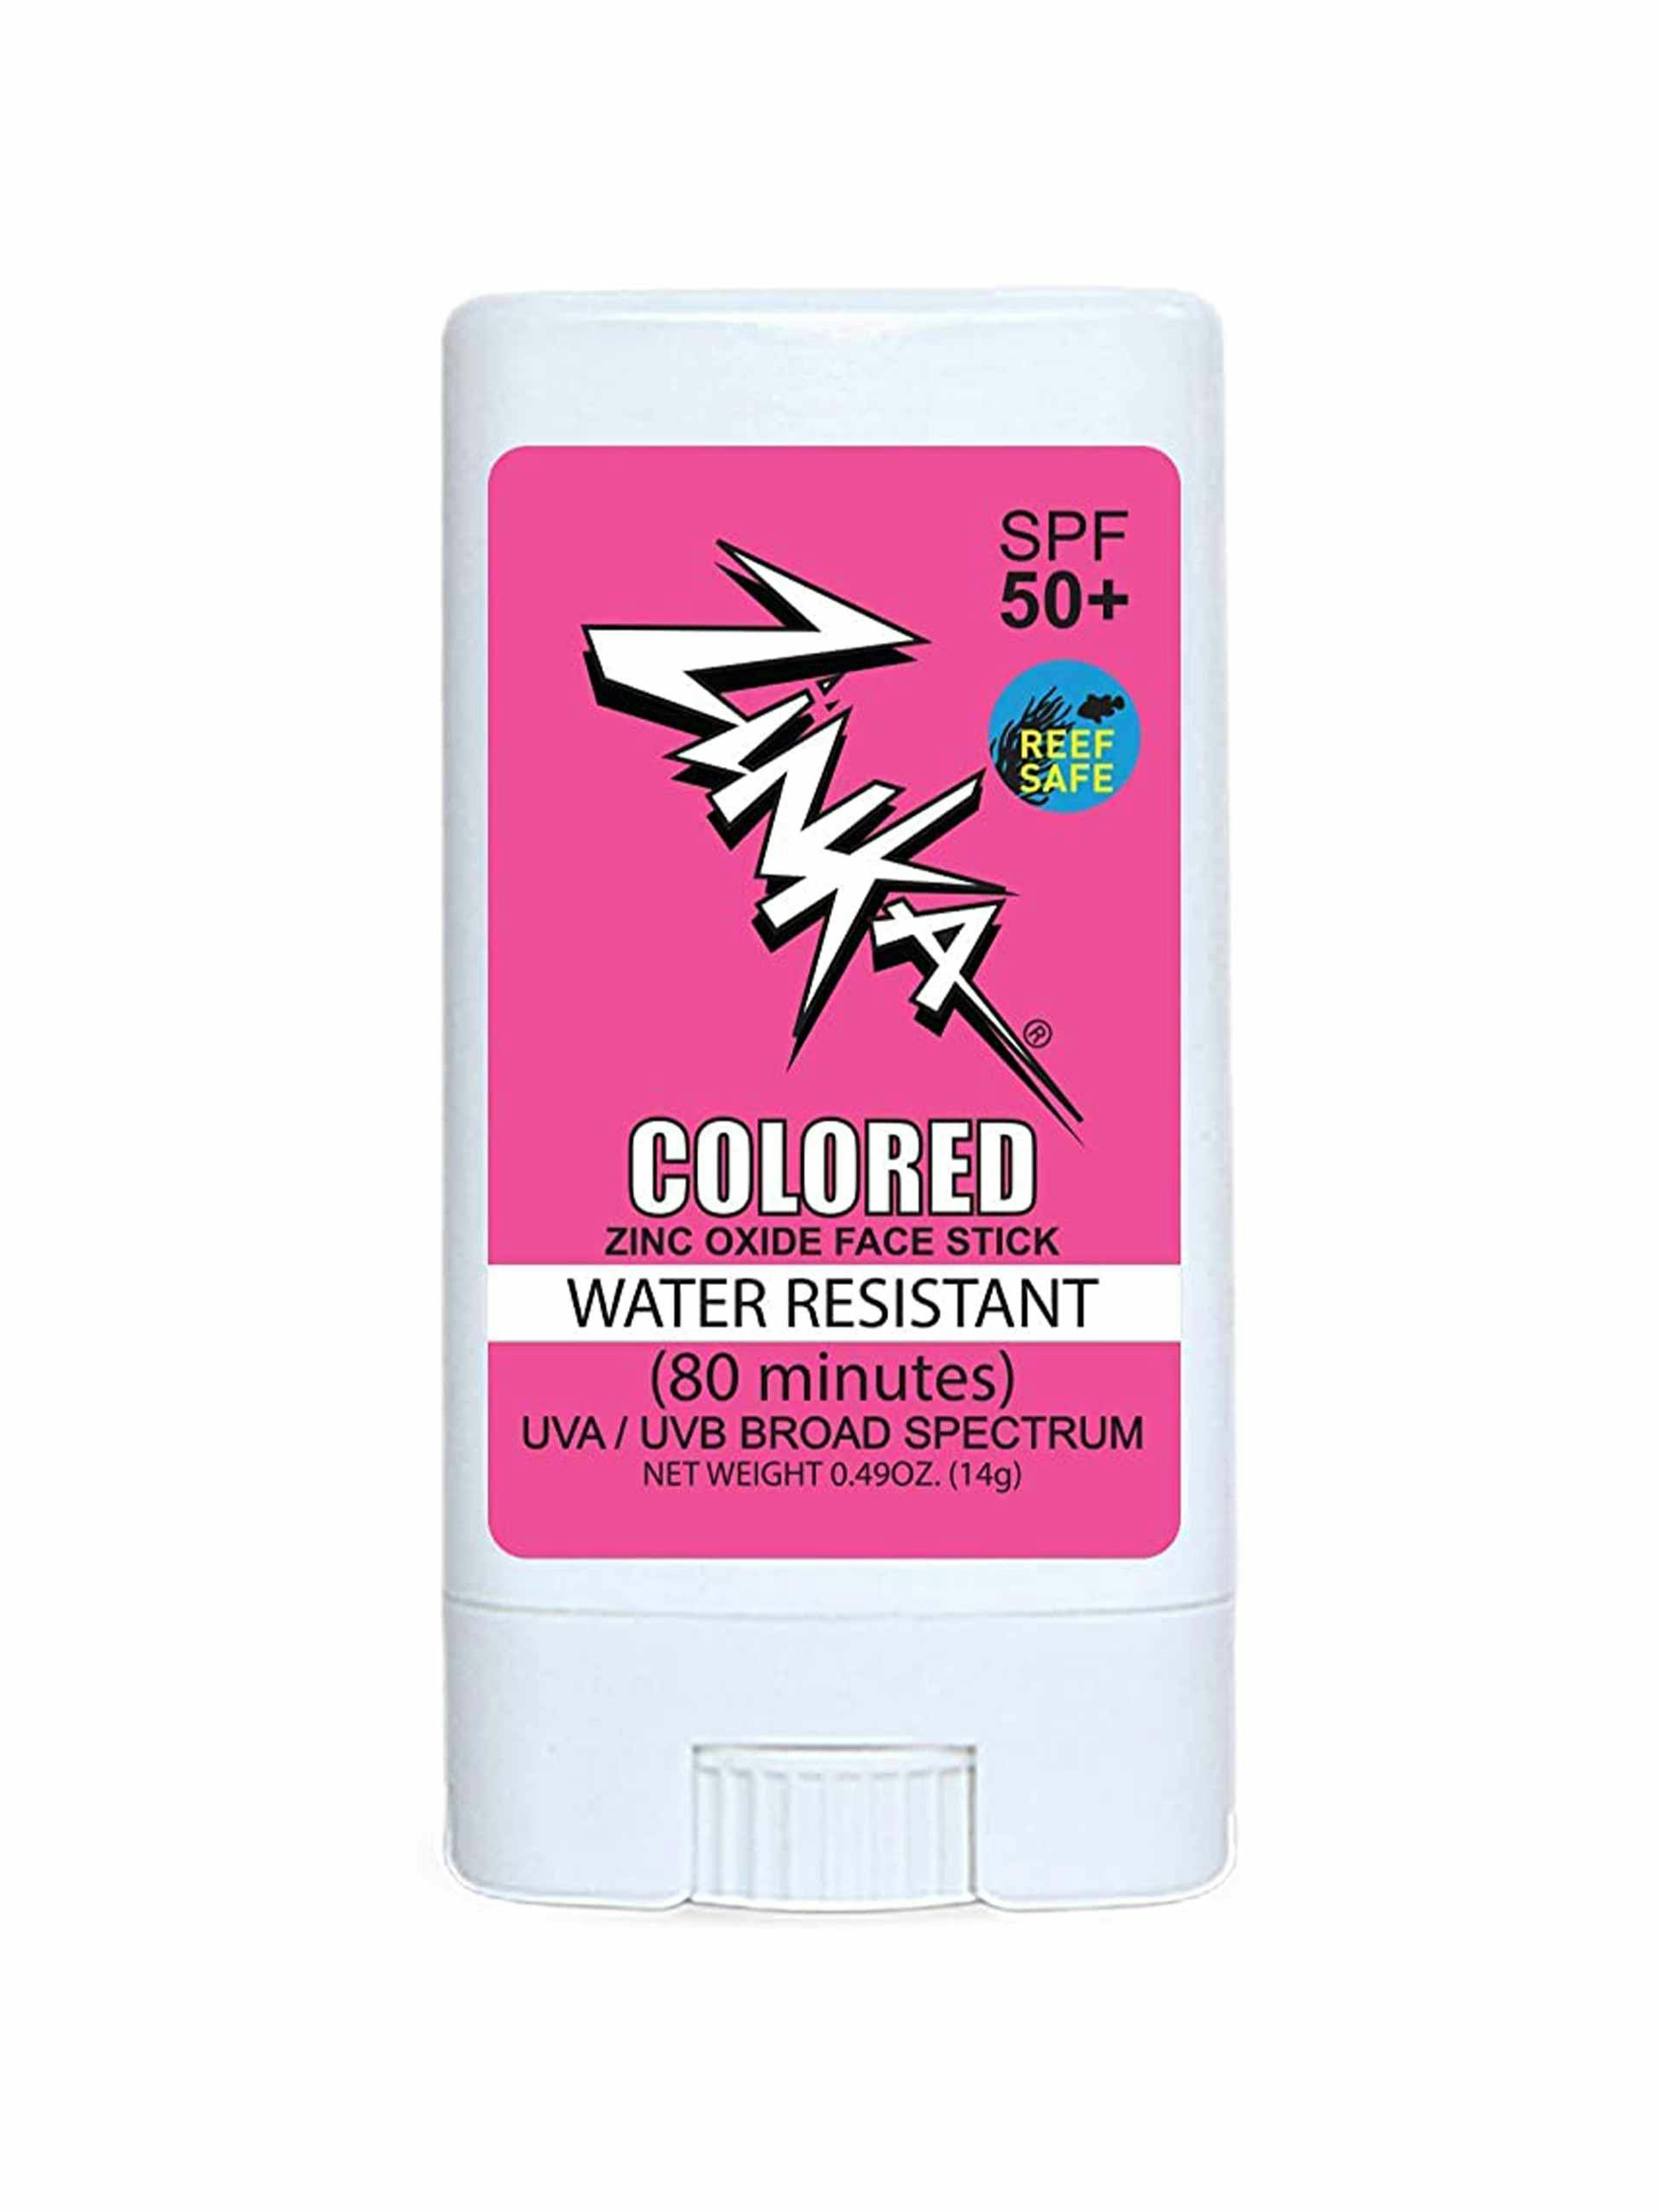 Pink water resistant zinc oxide face stick